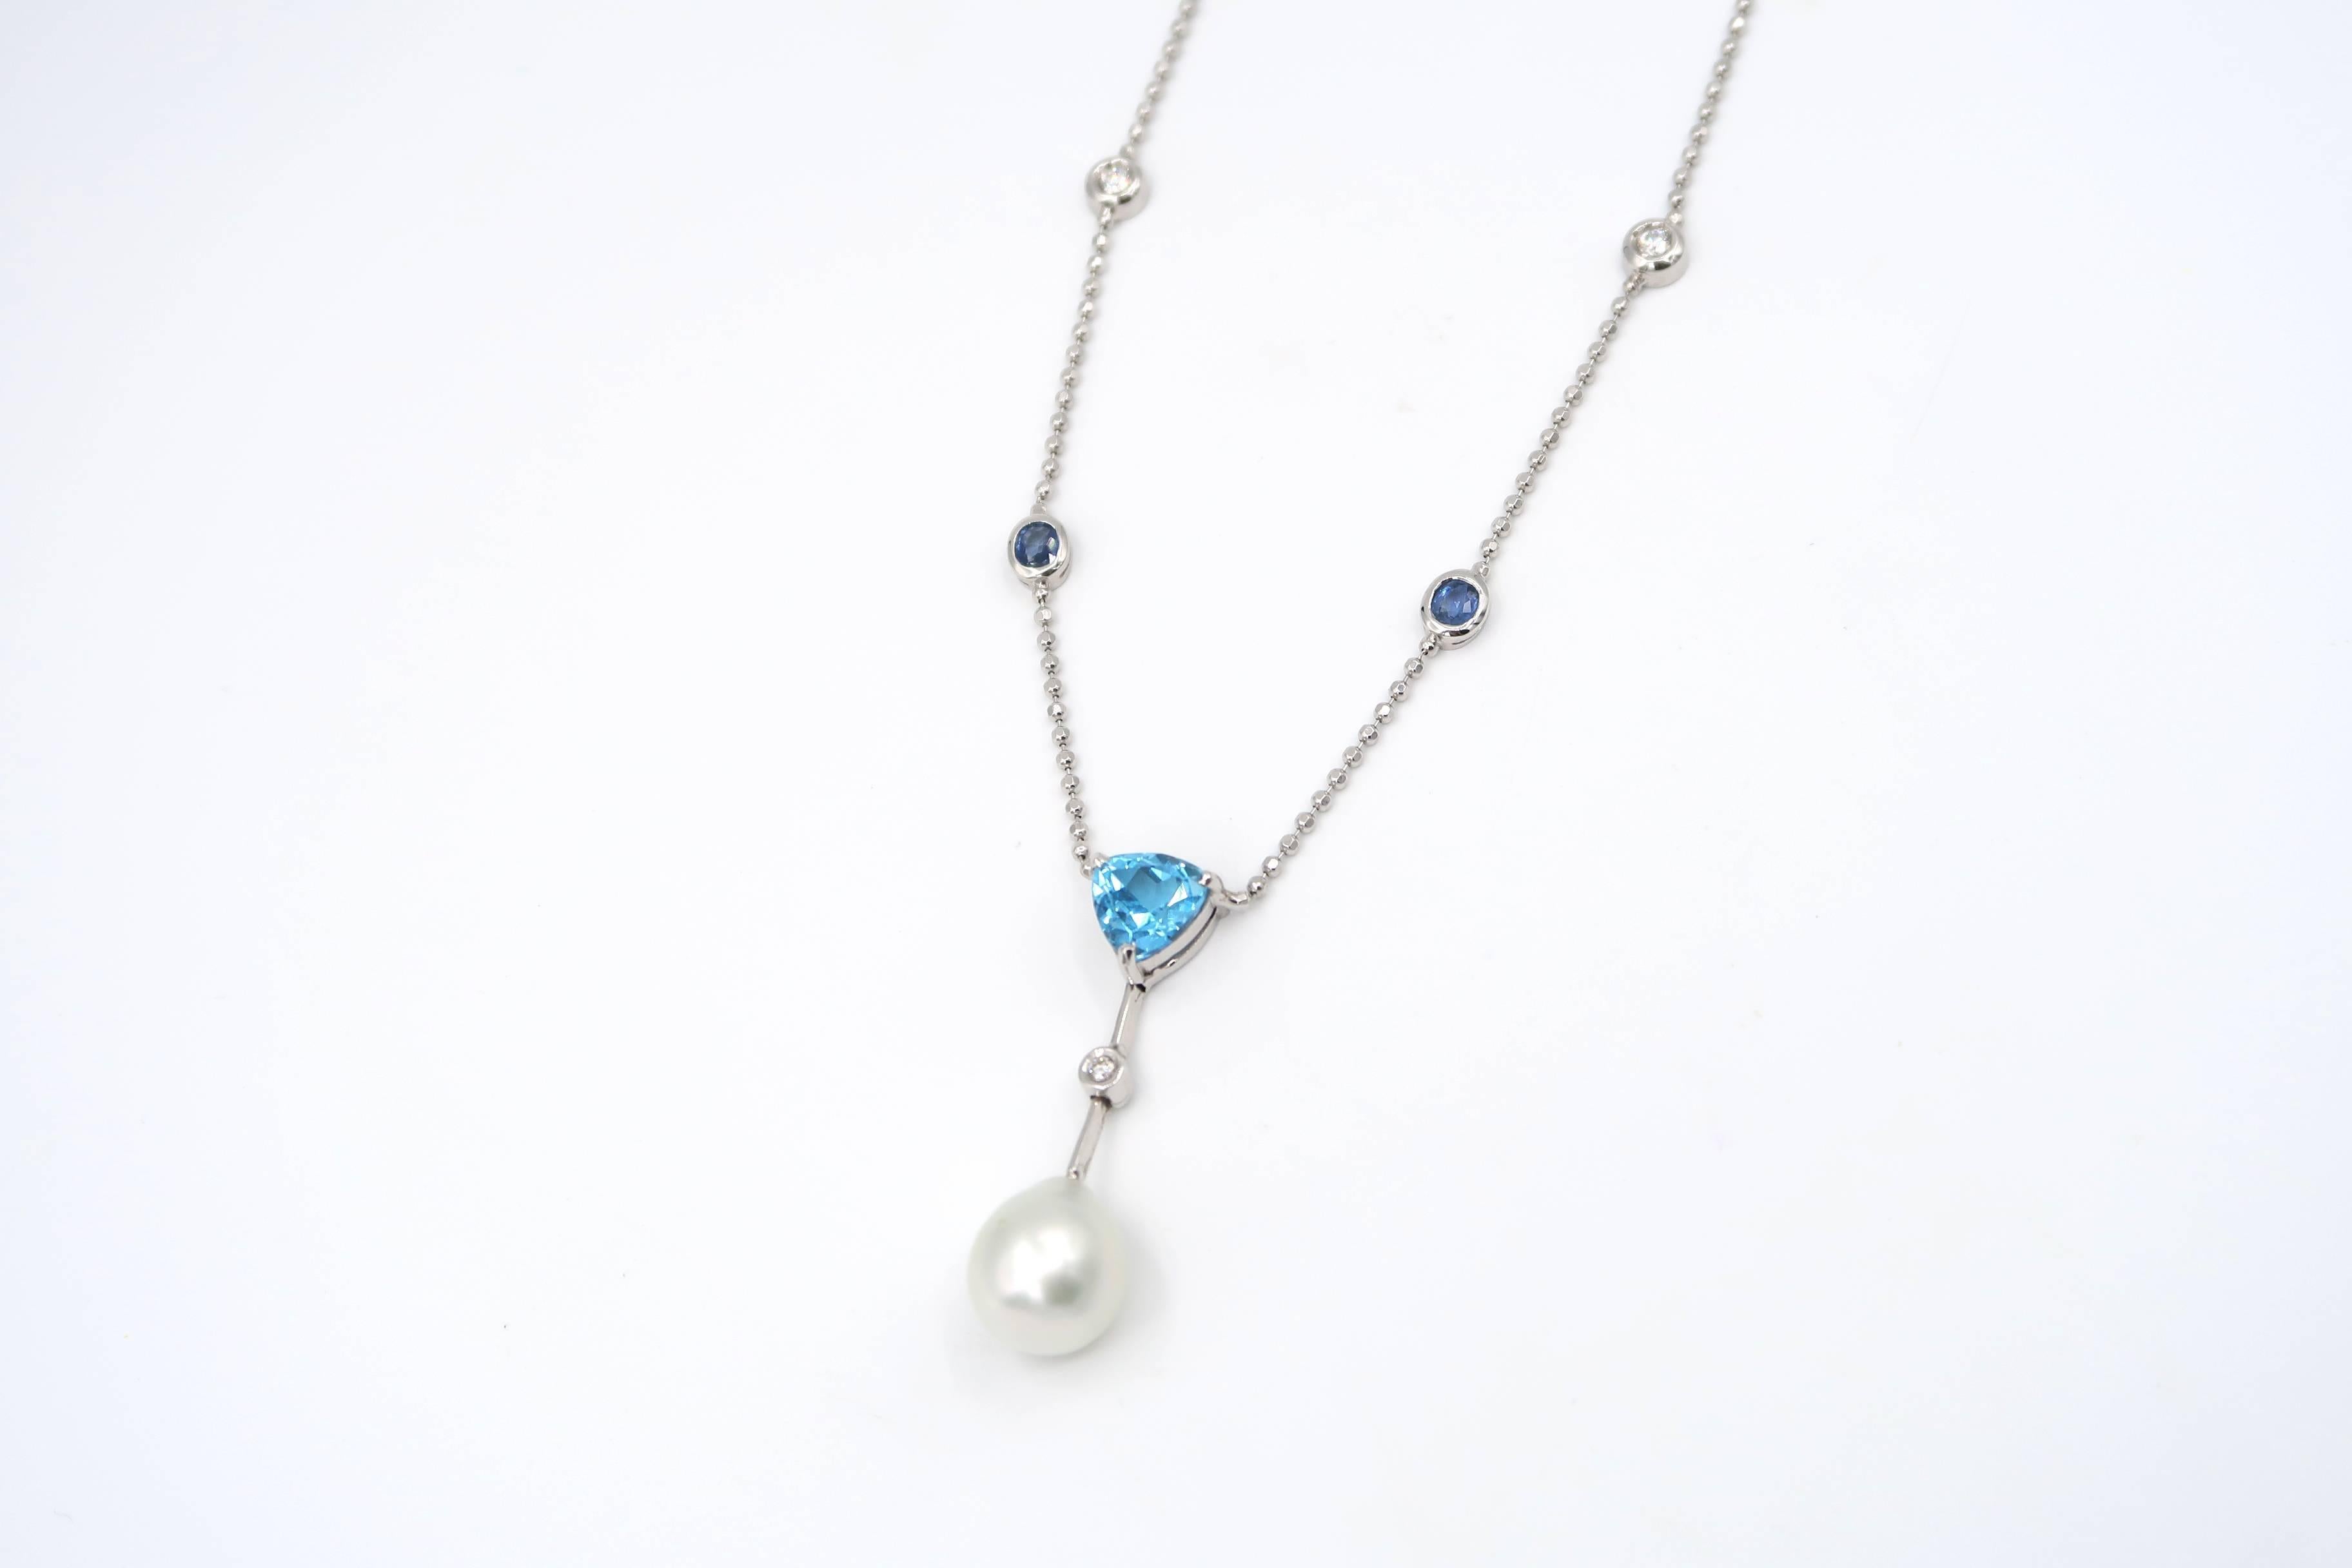 Blue Topaz South Sea Pearl Diamond Sapphire 18K White Gold Chain Drop Adjustable Necklace

Gold: 18K White Gold, 7.20 g
Diamond: 0.24 ct
Blue Topaz: 1.89 ct
Sapphire: 0.30 ct
South Sea Pearl: Drop, Silvery White

Approx. 16